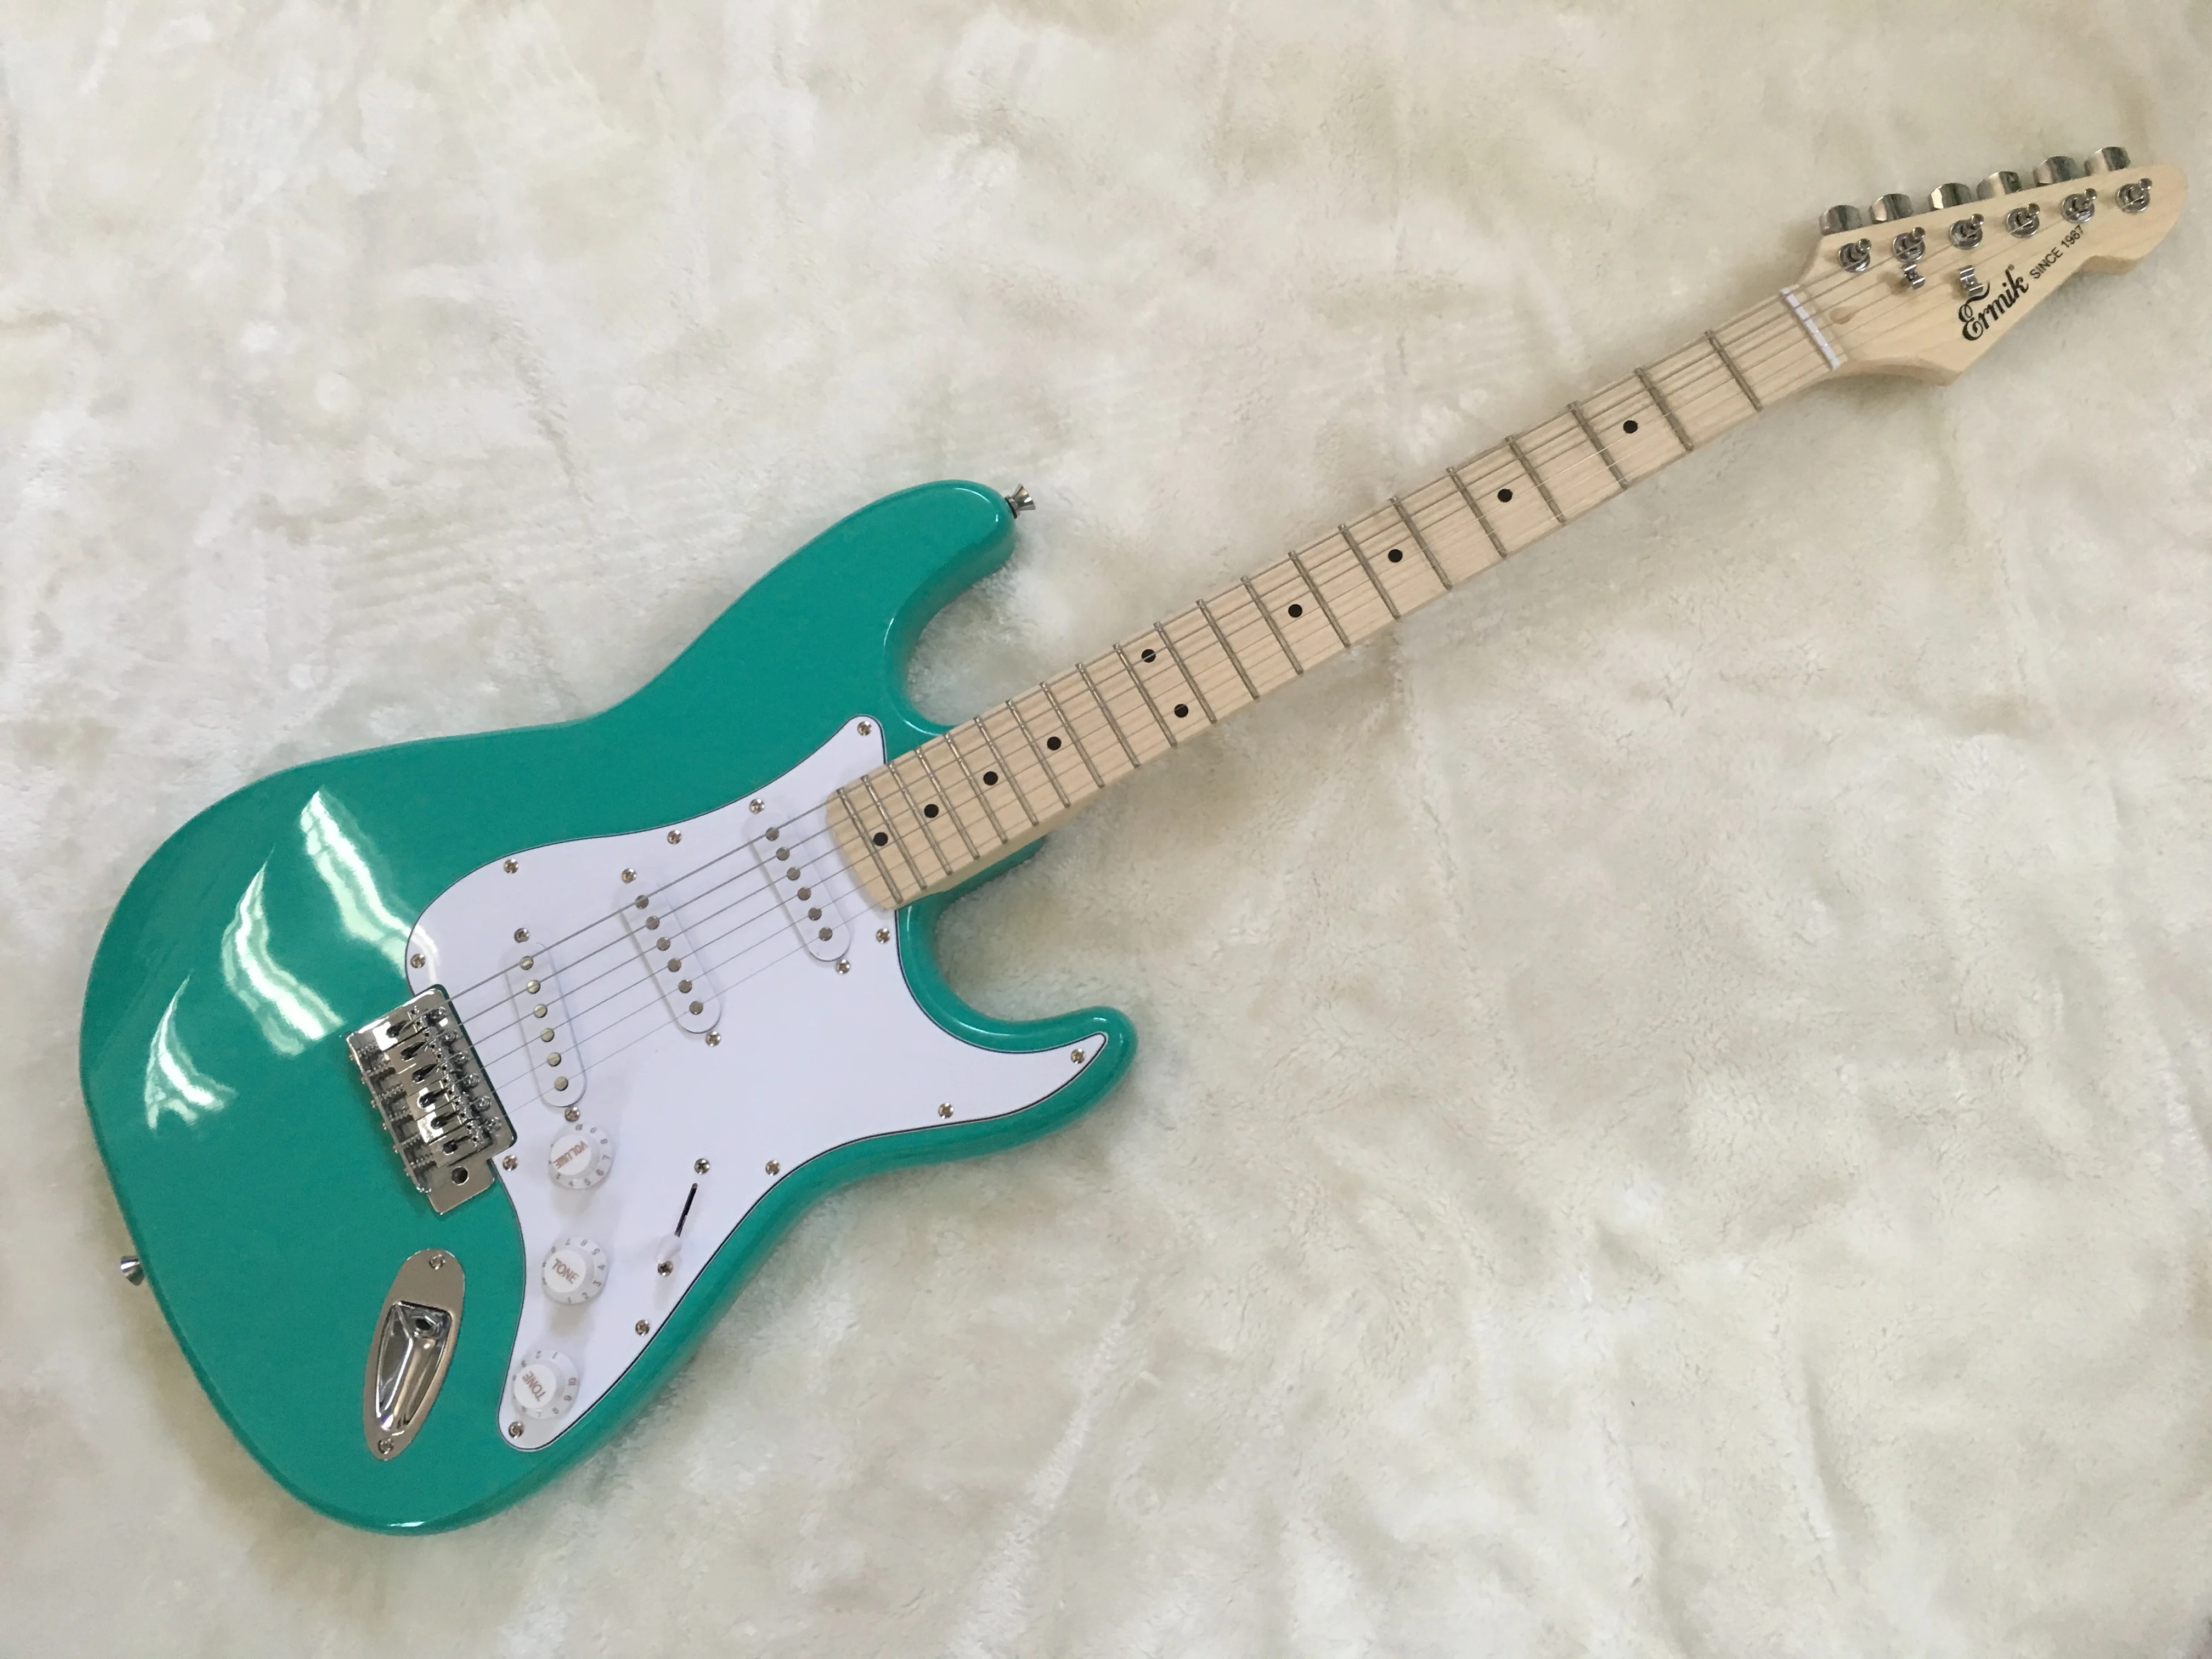 Электрогитара/гитара зеленого цвета ermik st/гитара в Китае